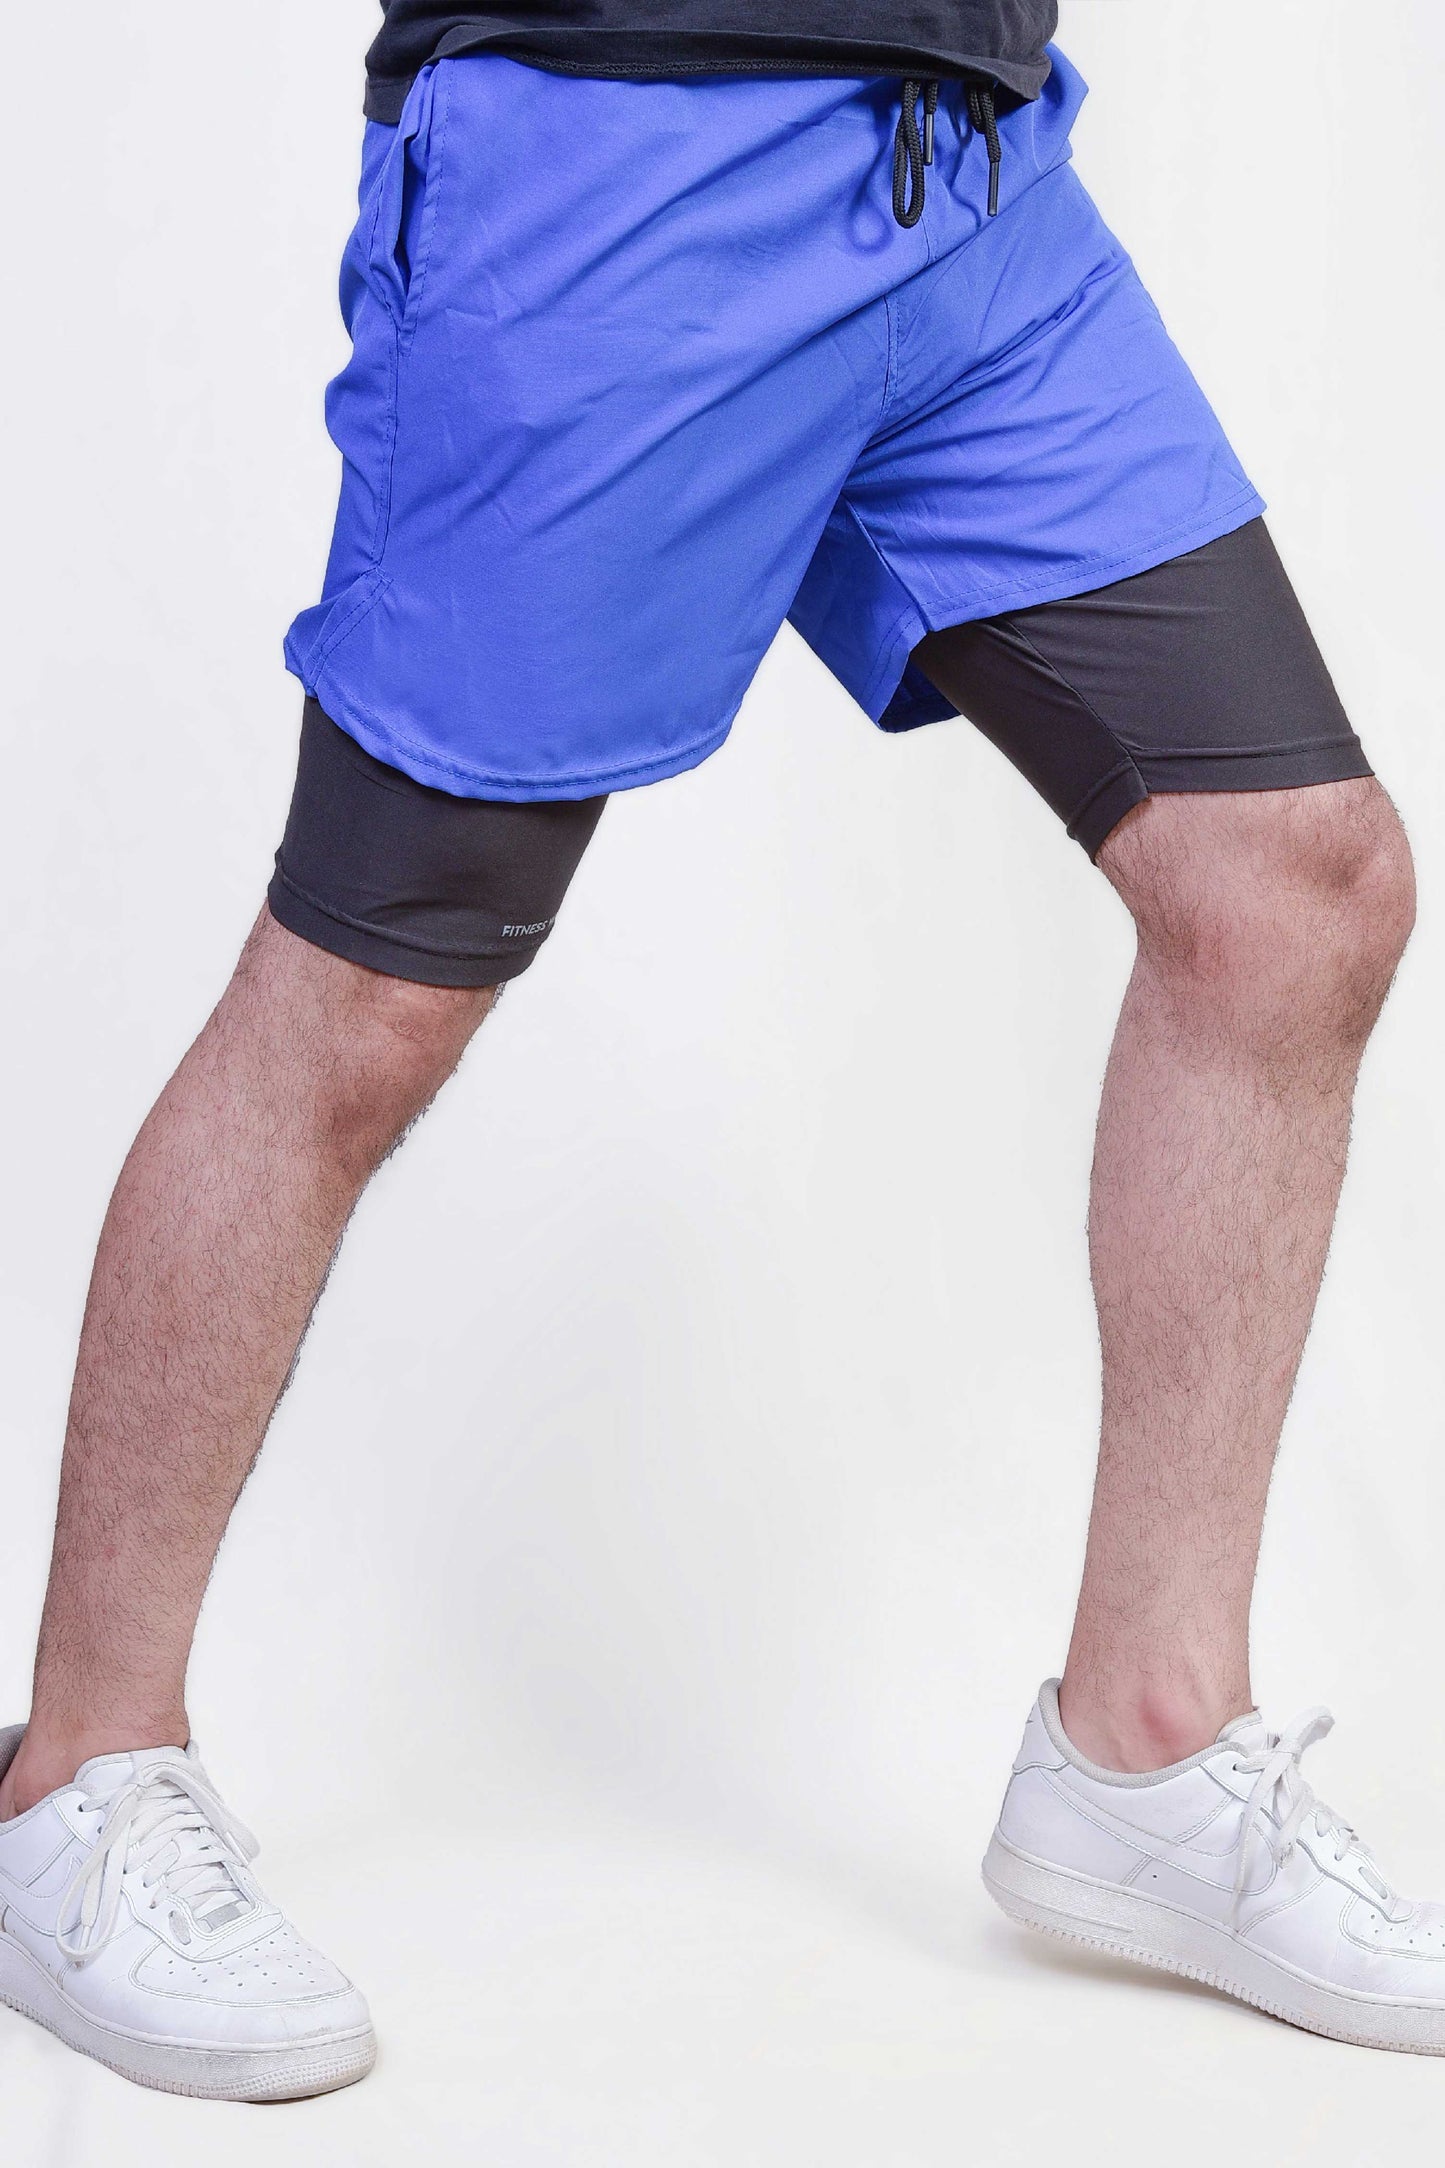 Fitness Welt Athletic Compression Shorts Blue